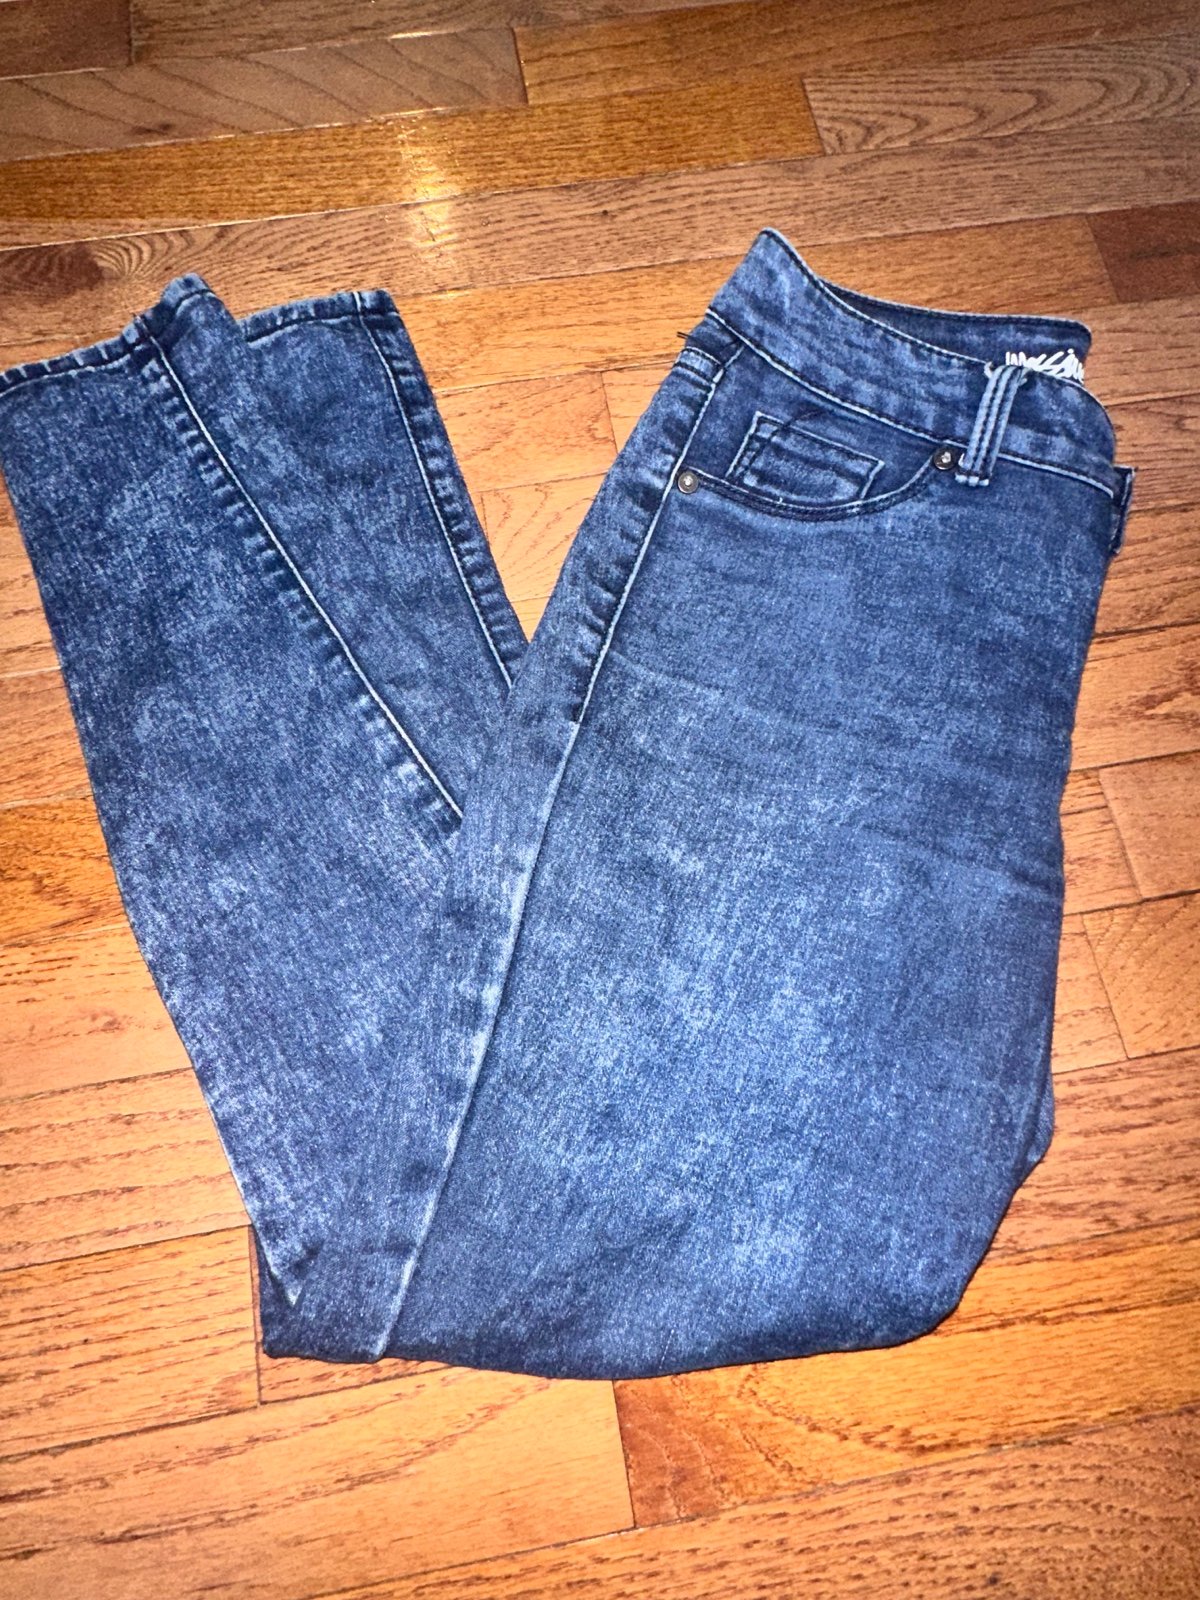 Fashion Mossimo Acid Wash Jeans 2/26 LNuMQJv6w Store On